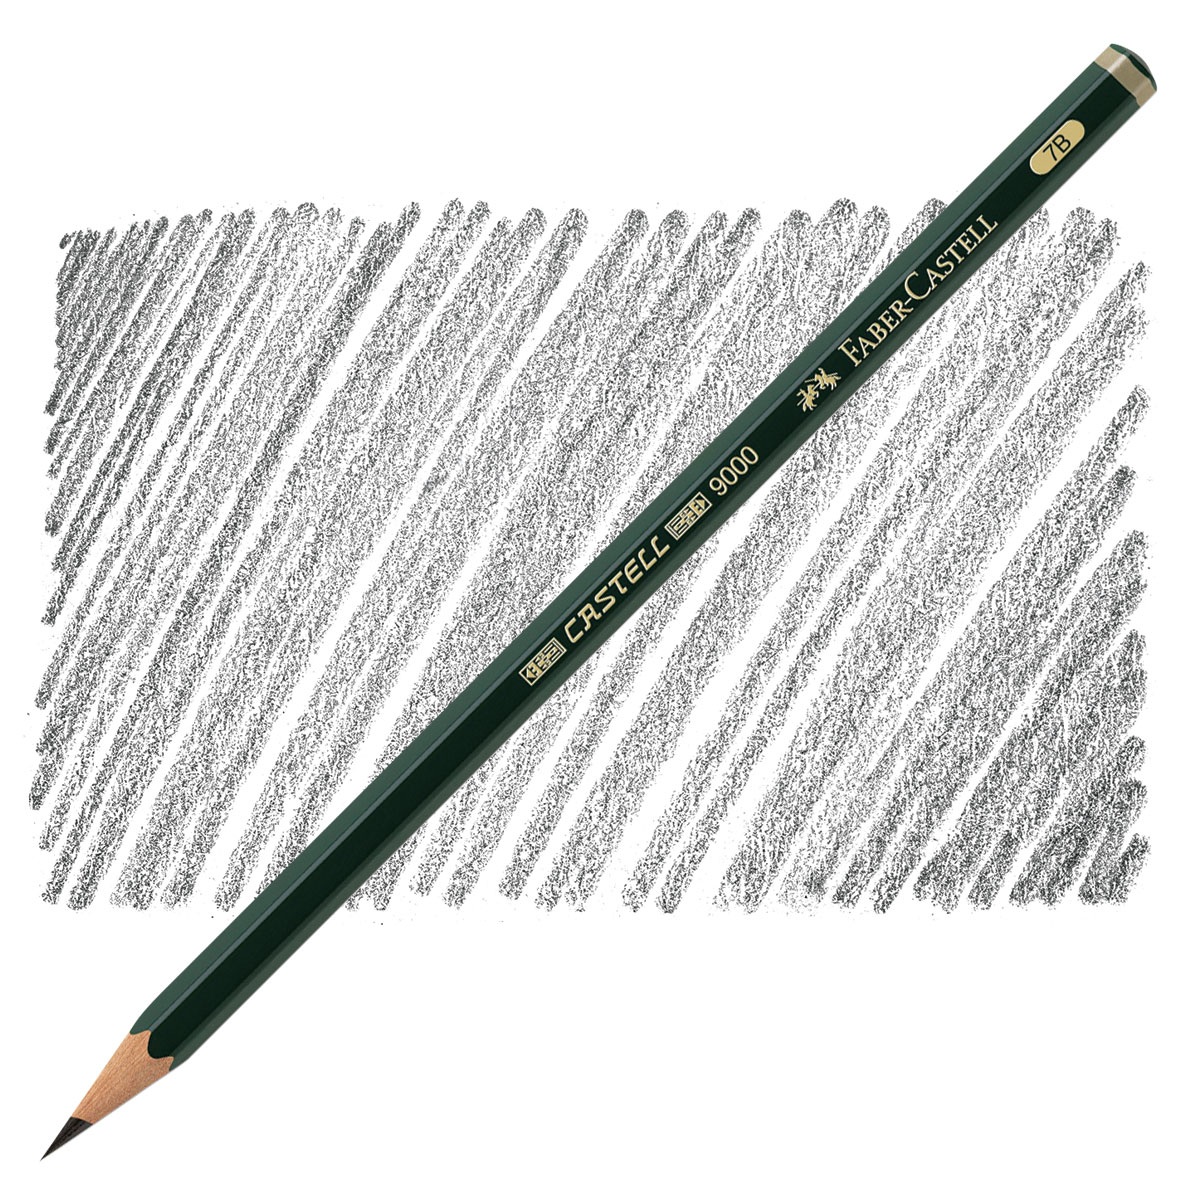  Faber-Castell 9000 Graphite Pencils Art Set In Slimflexi Case  (8B-2H, 12pcs) : Office Products